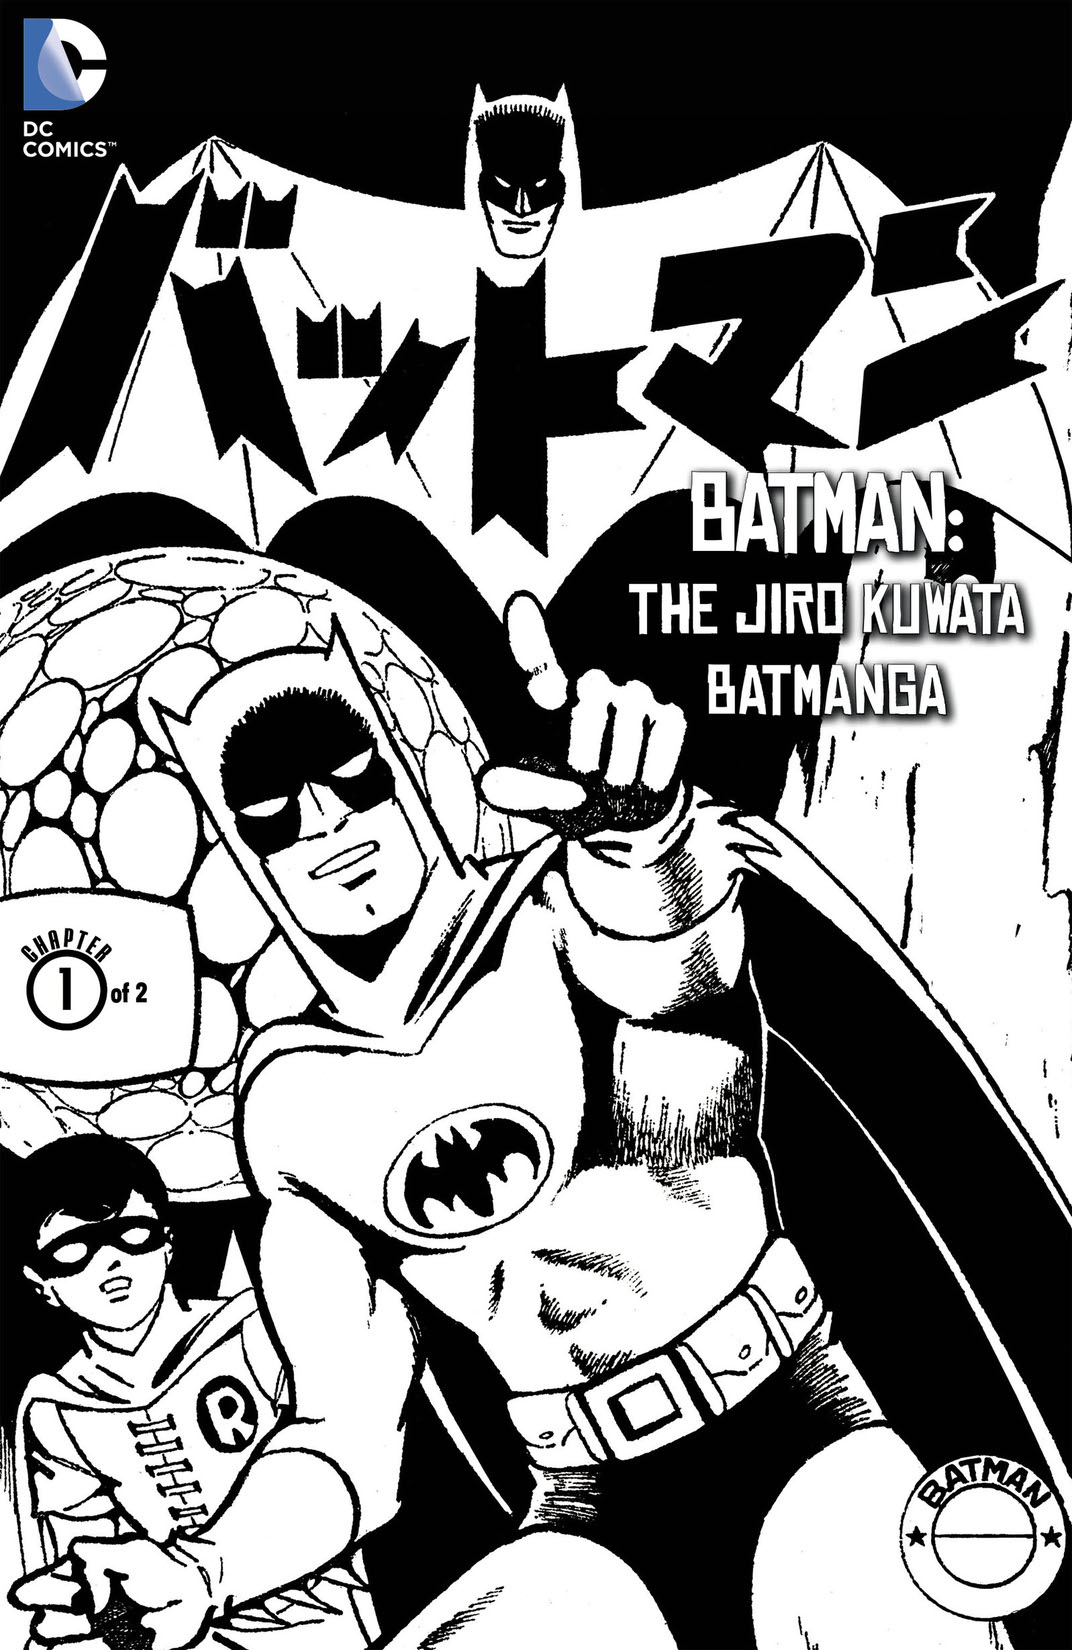 Batman: The Jiro Kuwata Batmanga #52 preview images